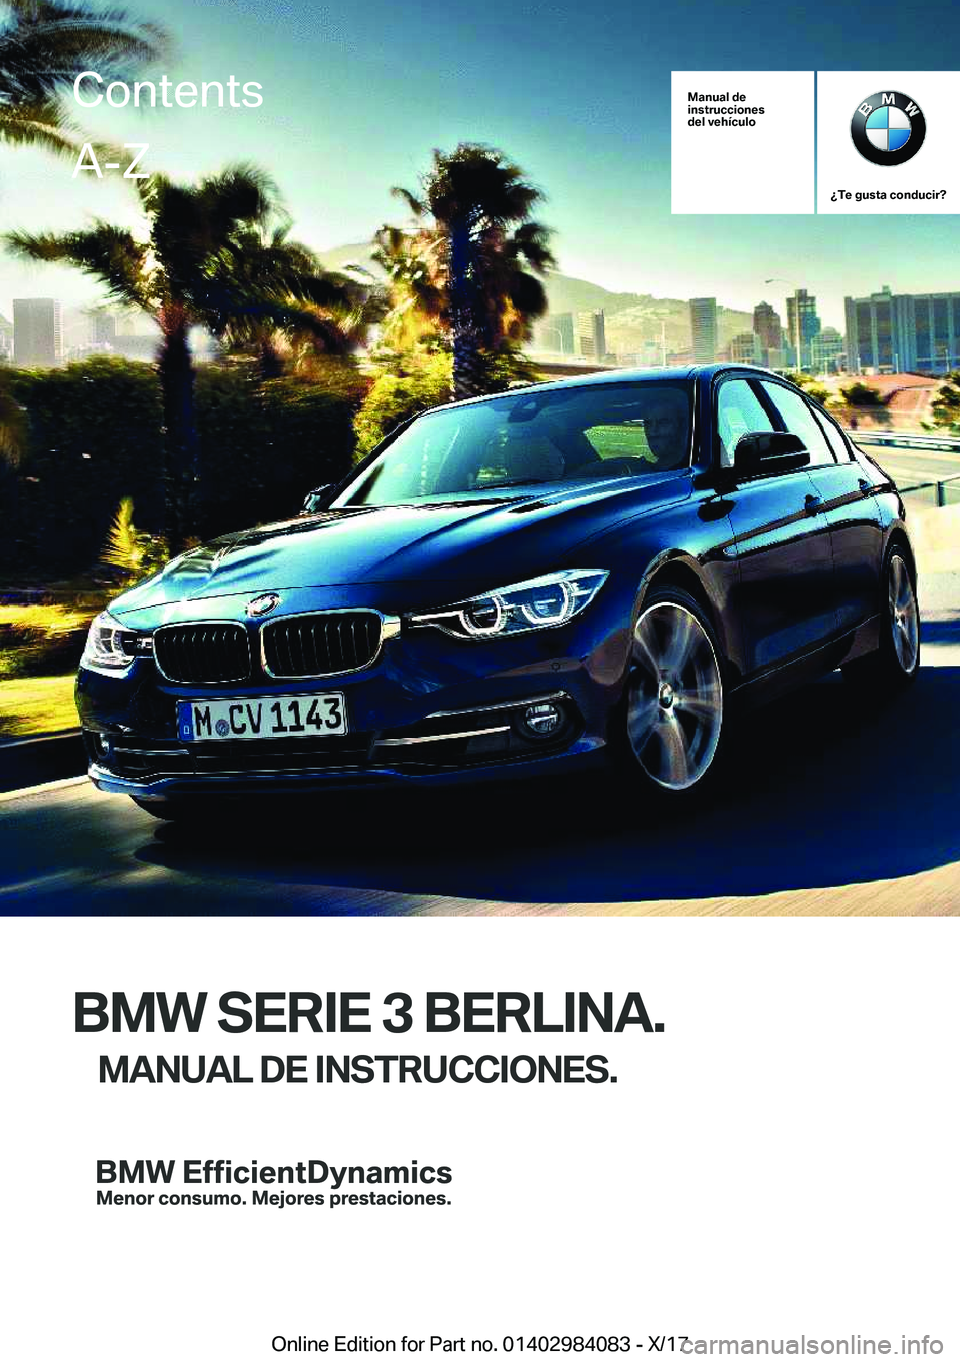 BMW 3 SERIES 2018  Manuales de Empleo (in Spanish) �M�a�n�u�a�l��d�e
�i�n�s�t�r�u�c�c�i�o�n�e�s
�d�e�l��v�e�h�